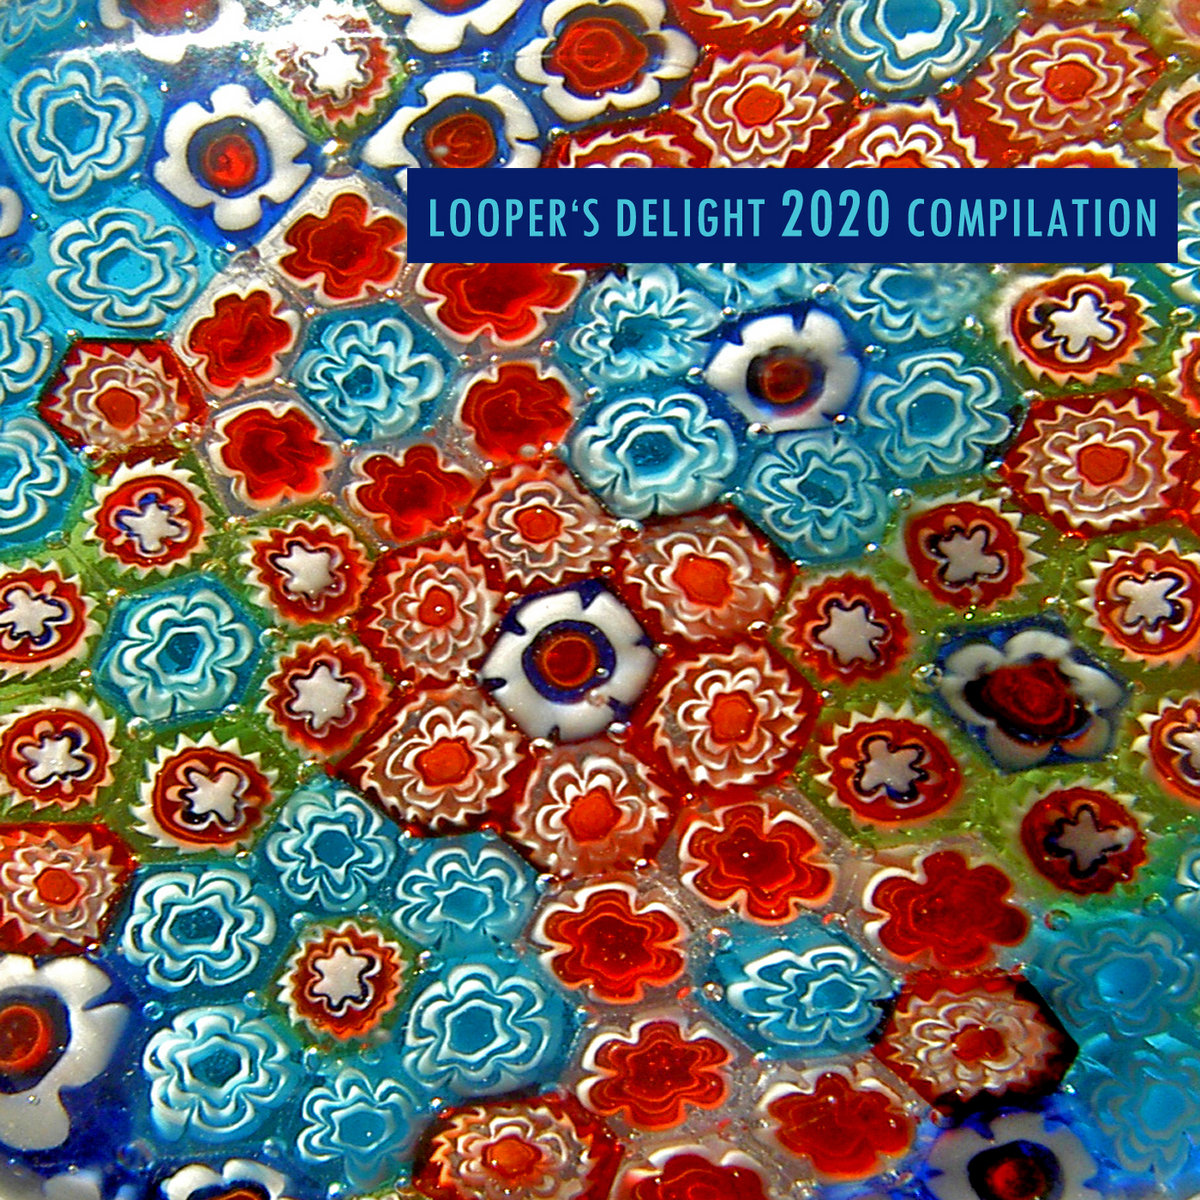 Looper's Delight 2020 Compilation